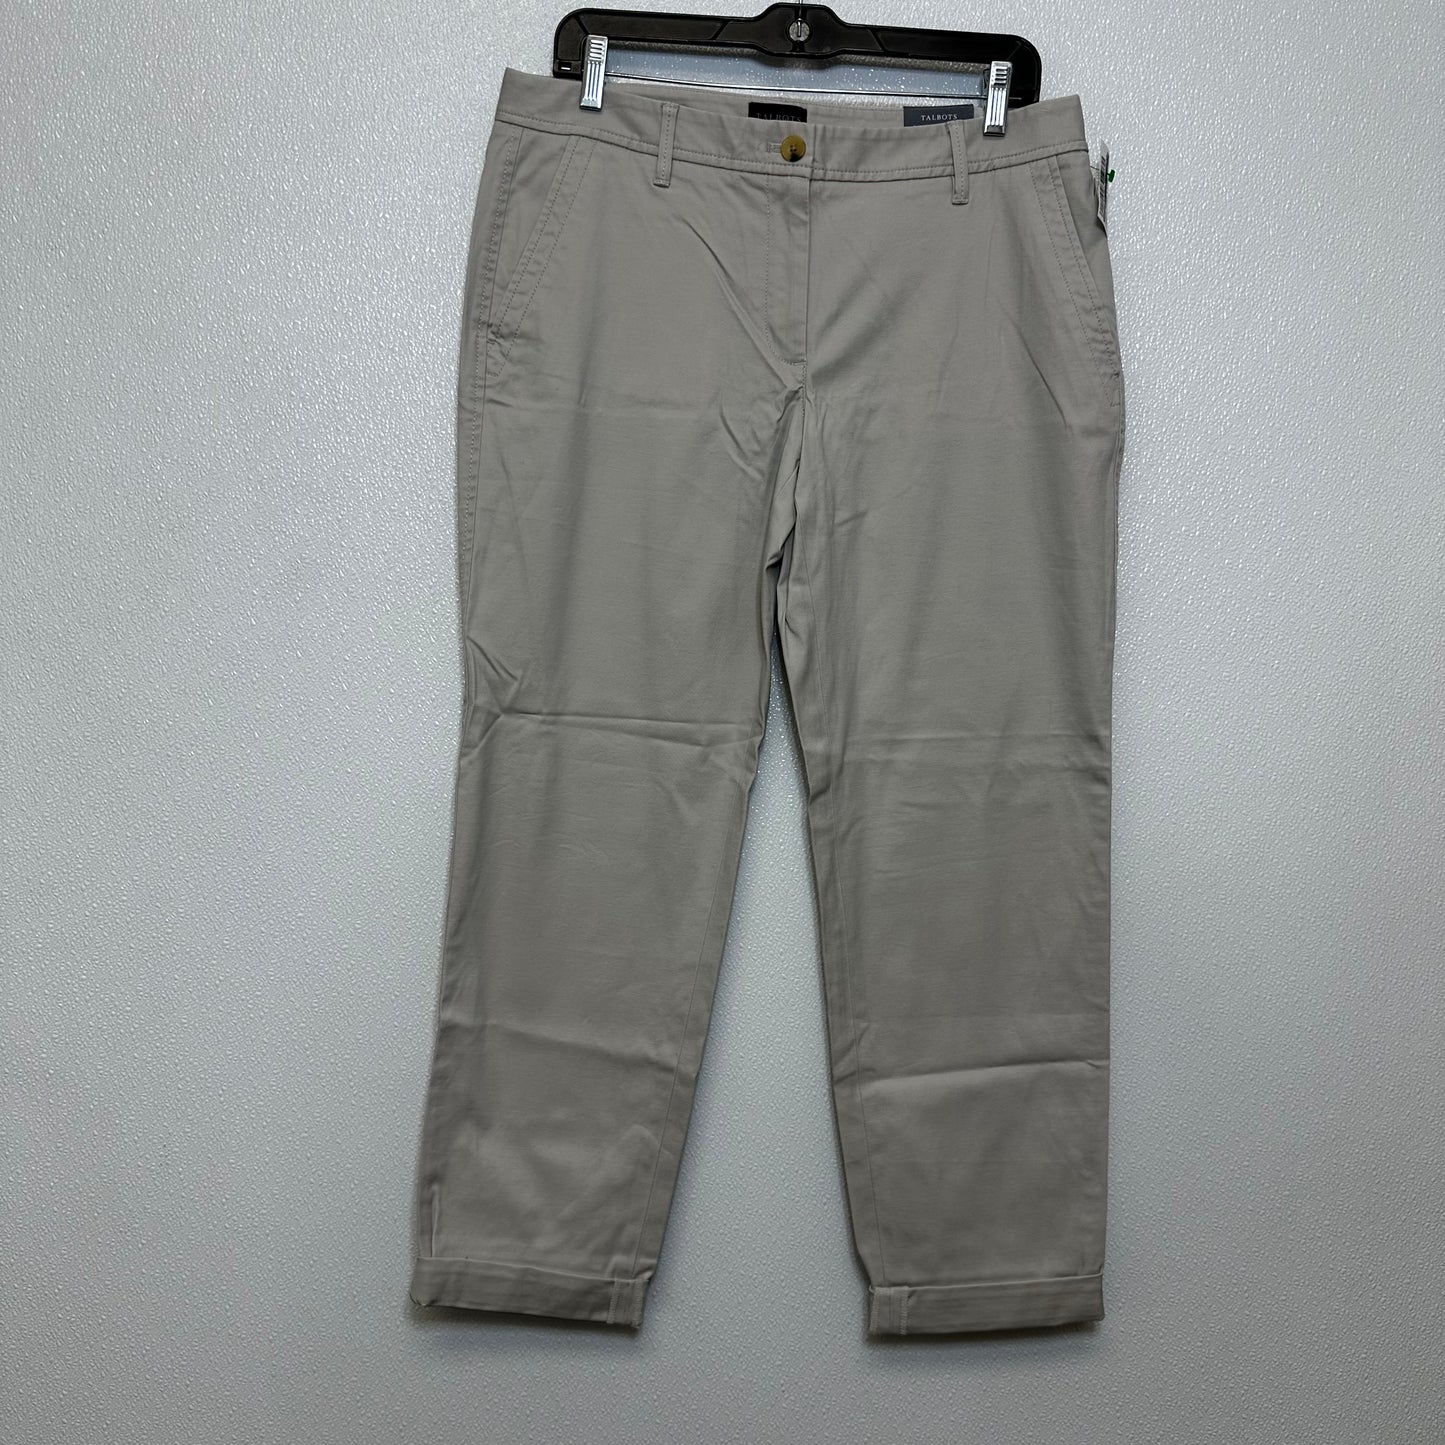 Khaki Pants Chinos & Khakis Talbots, Size 6